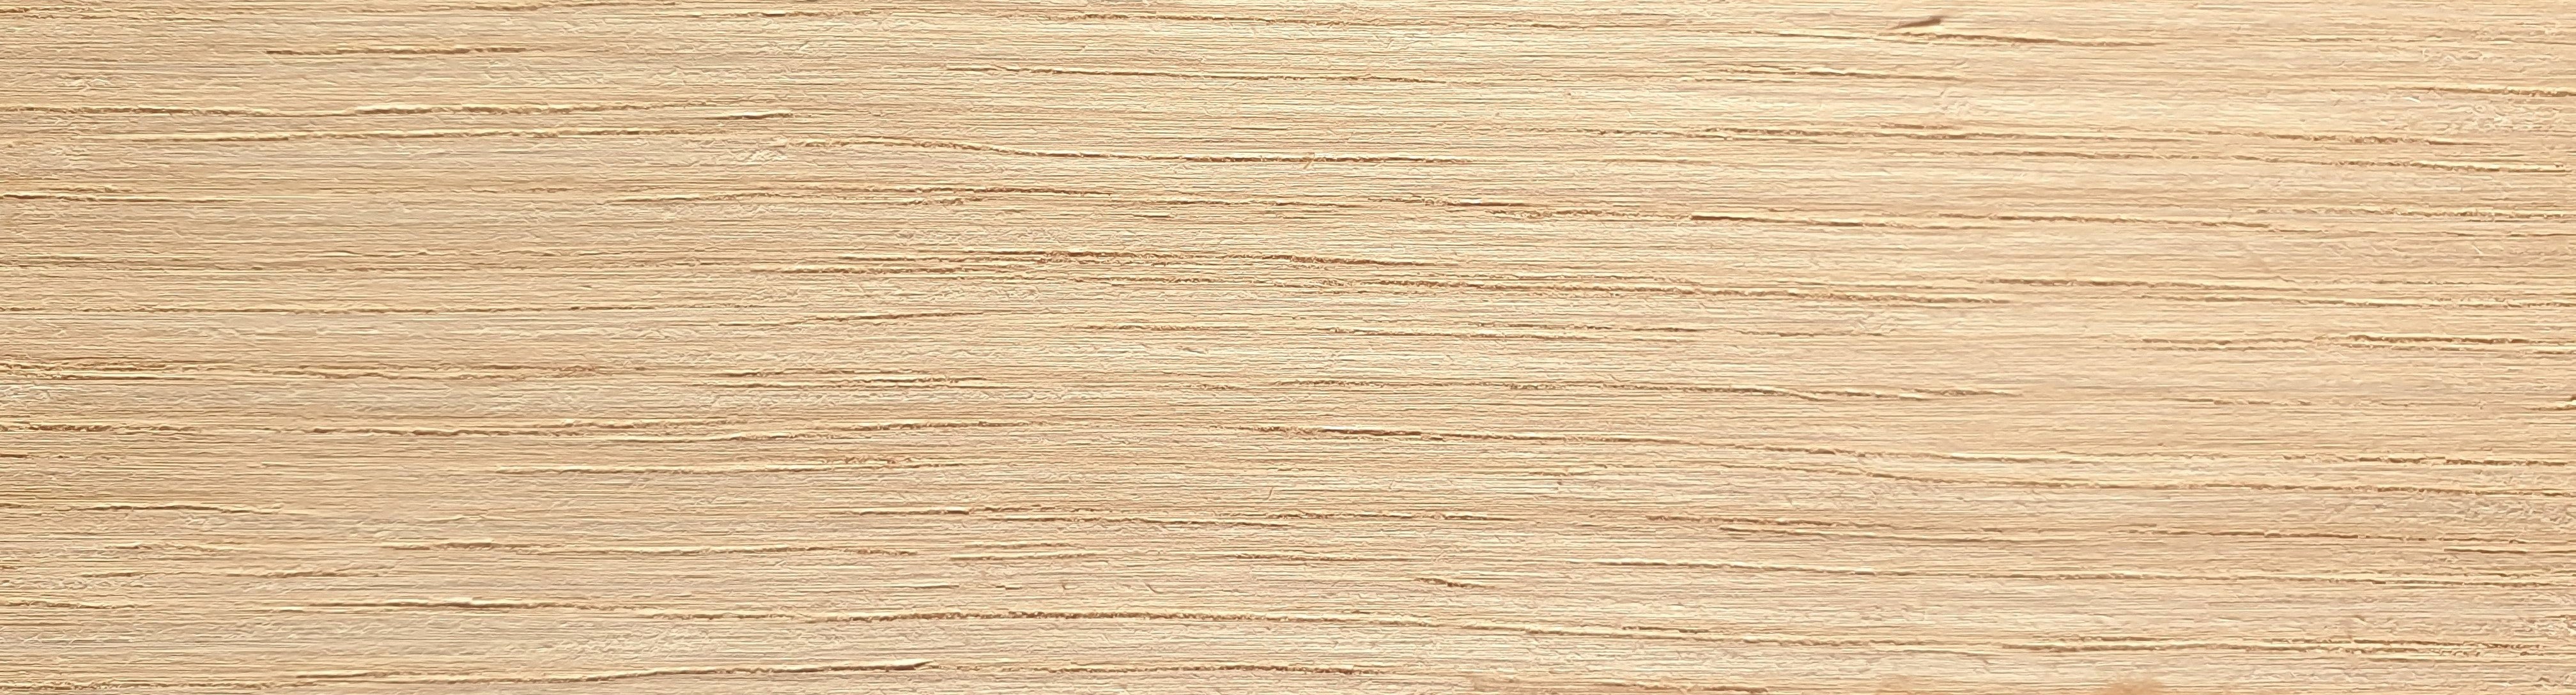 American White Oak Unglued Edging / Lipping 30mm x 2mm Thick Oak Wood Edging